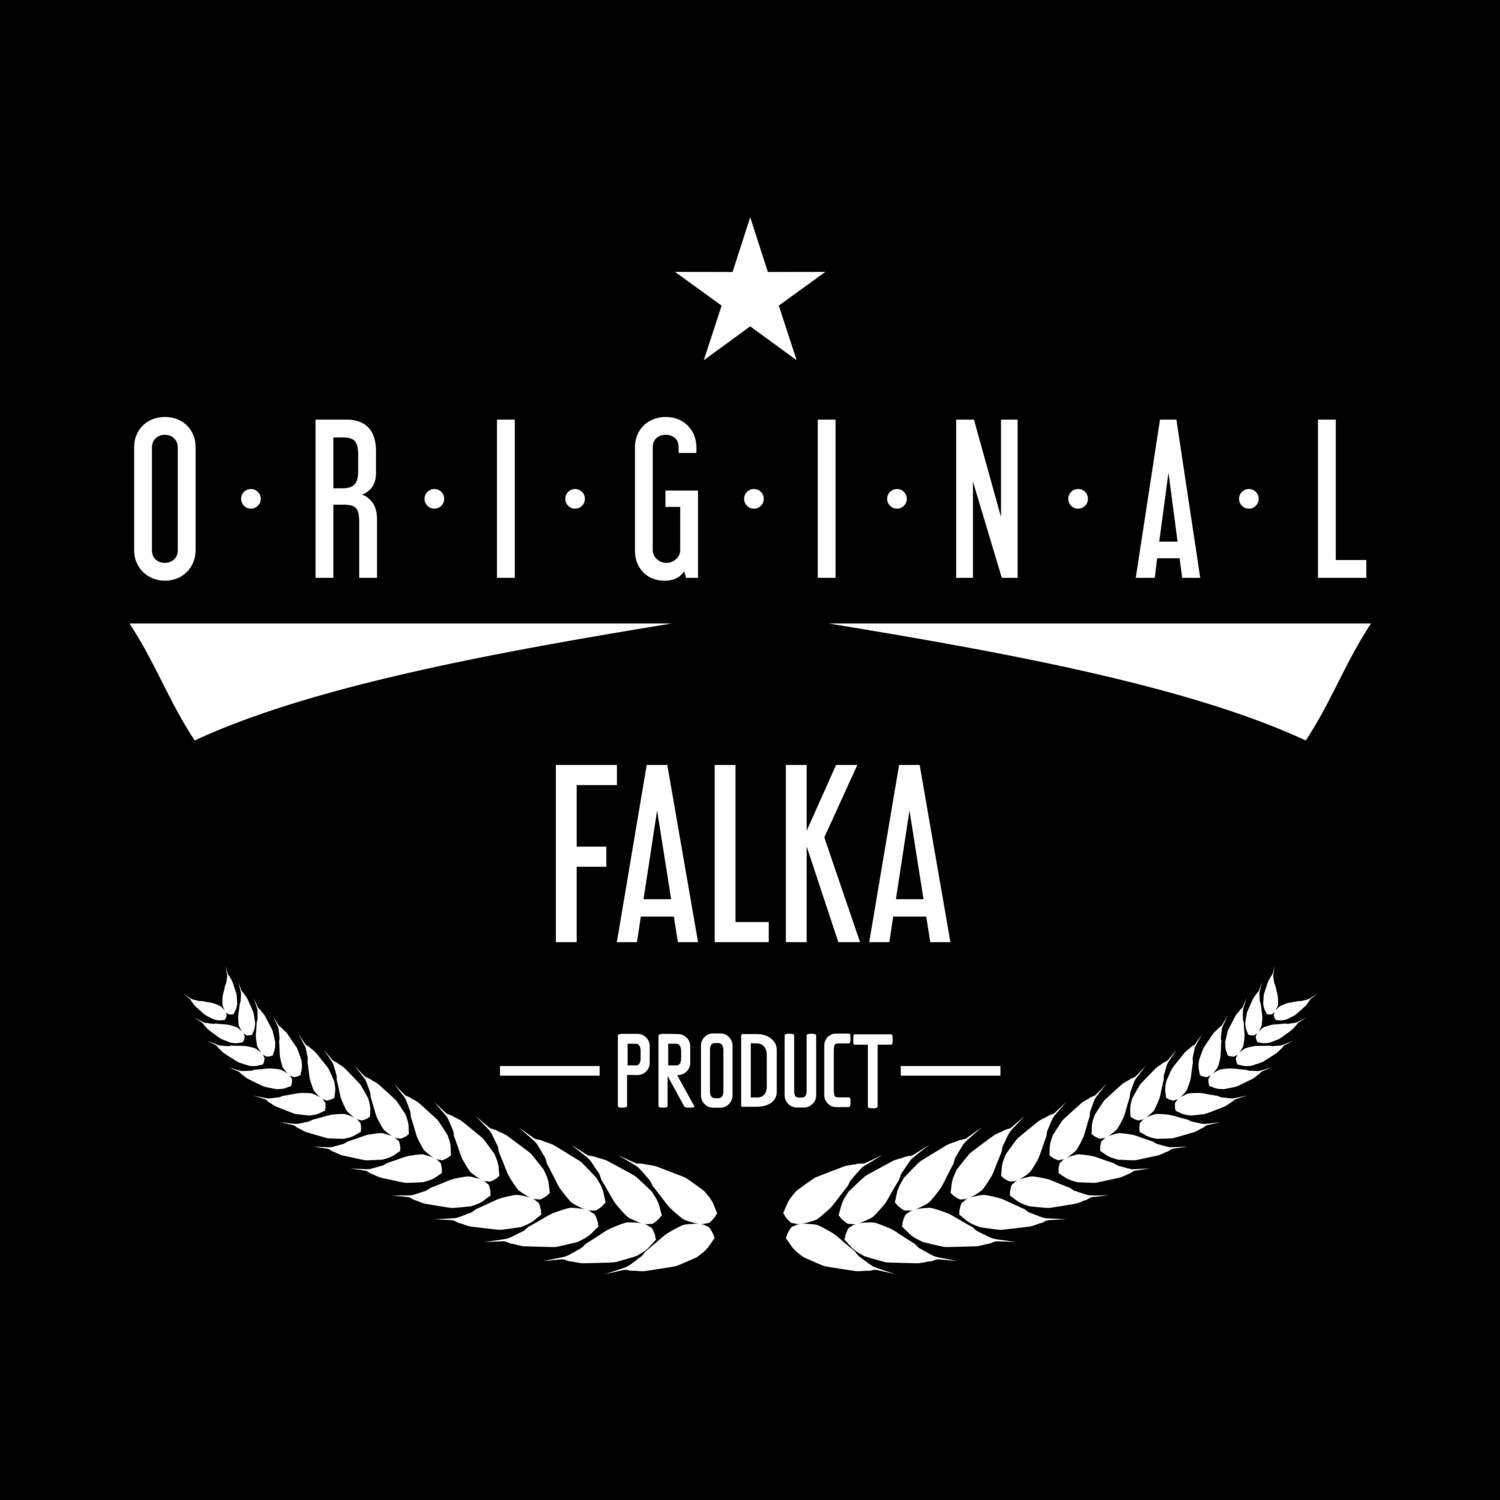 Falka T-Shirt »Original Product«